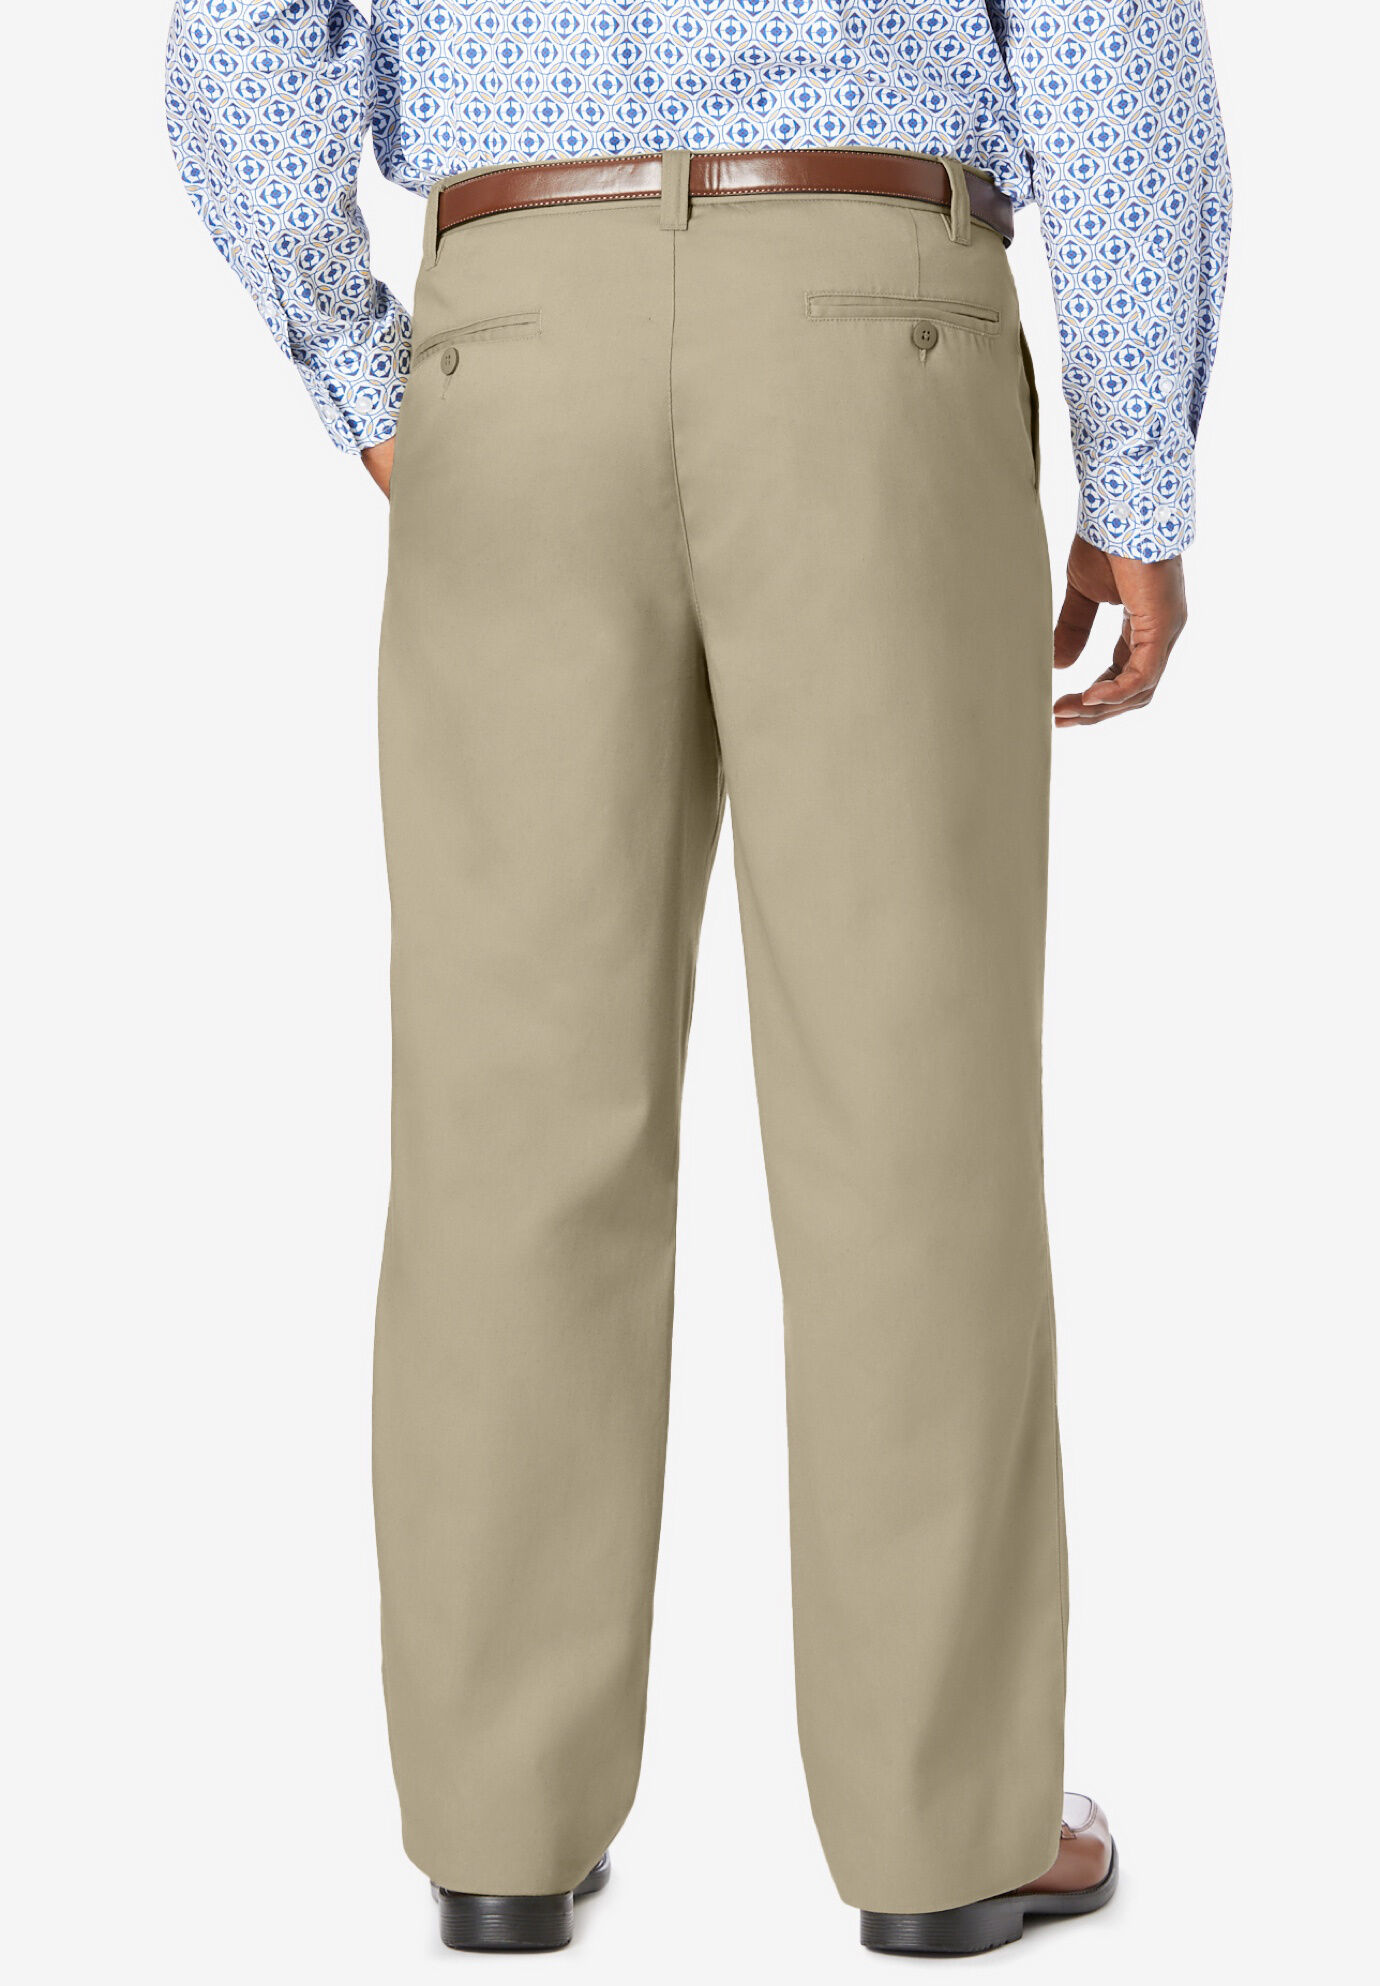 SADDLEBRED Men's Perfect Pant Wrinkle Free Khaki Pants Sz 40x29 NWT  $58 Straight | eBay